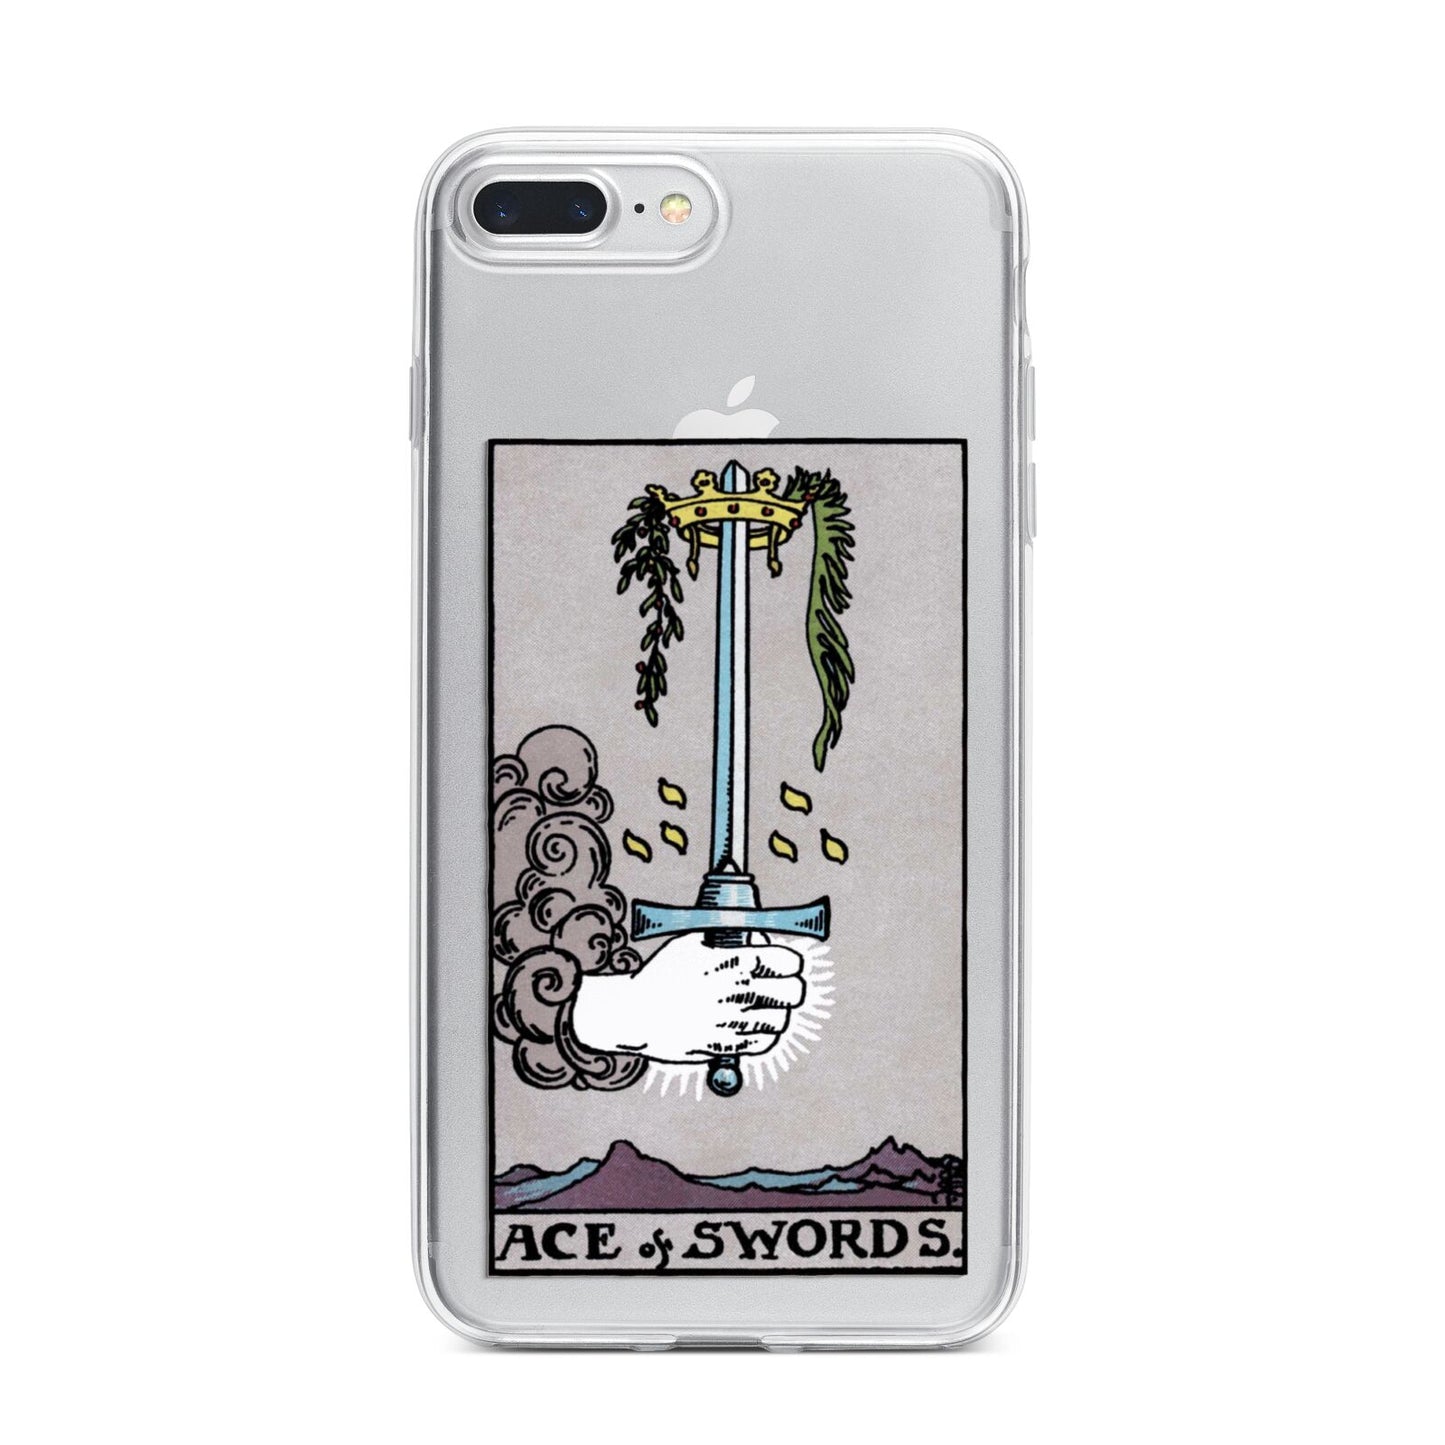 Ace of Swords Tarot Card iPhone 7 Plus Bumper Case on Silver iPhone